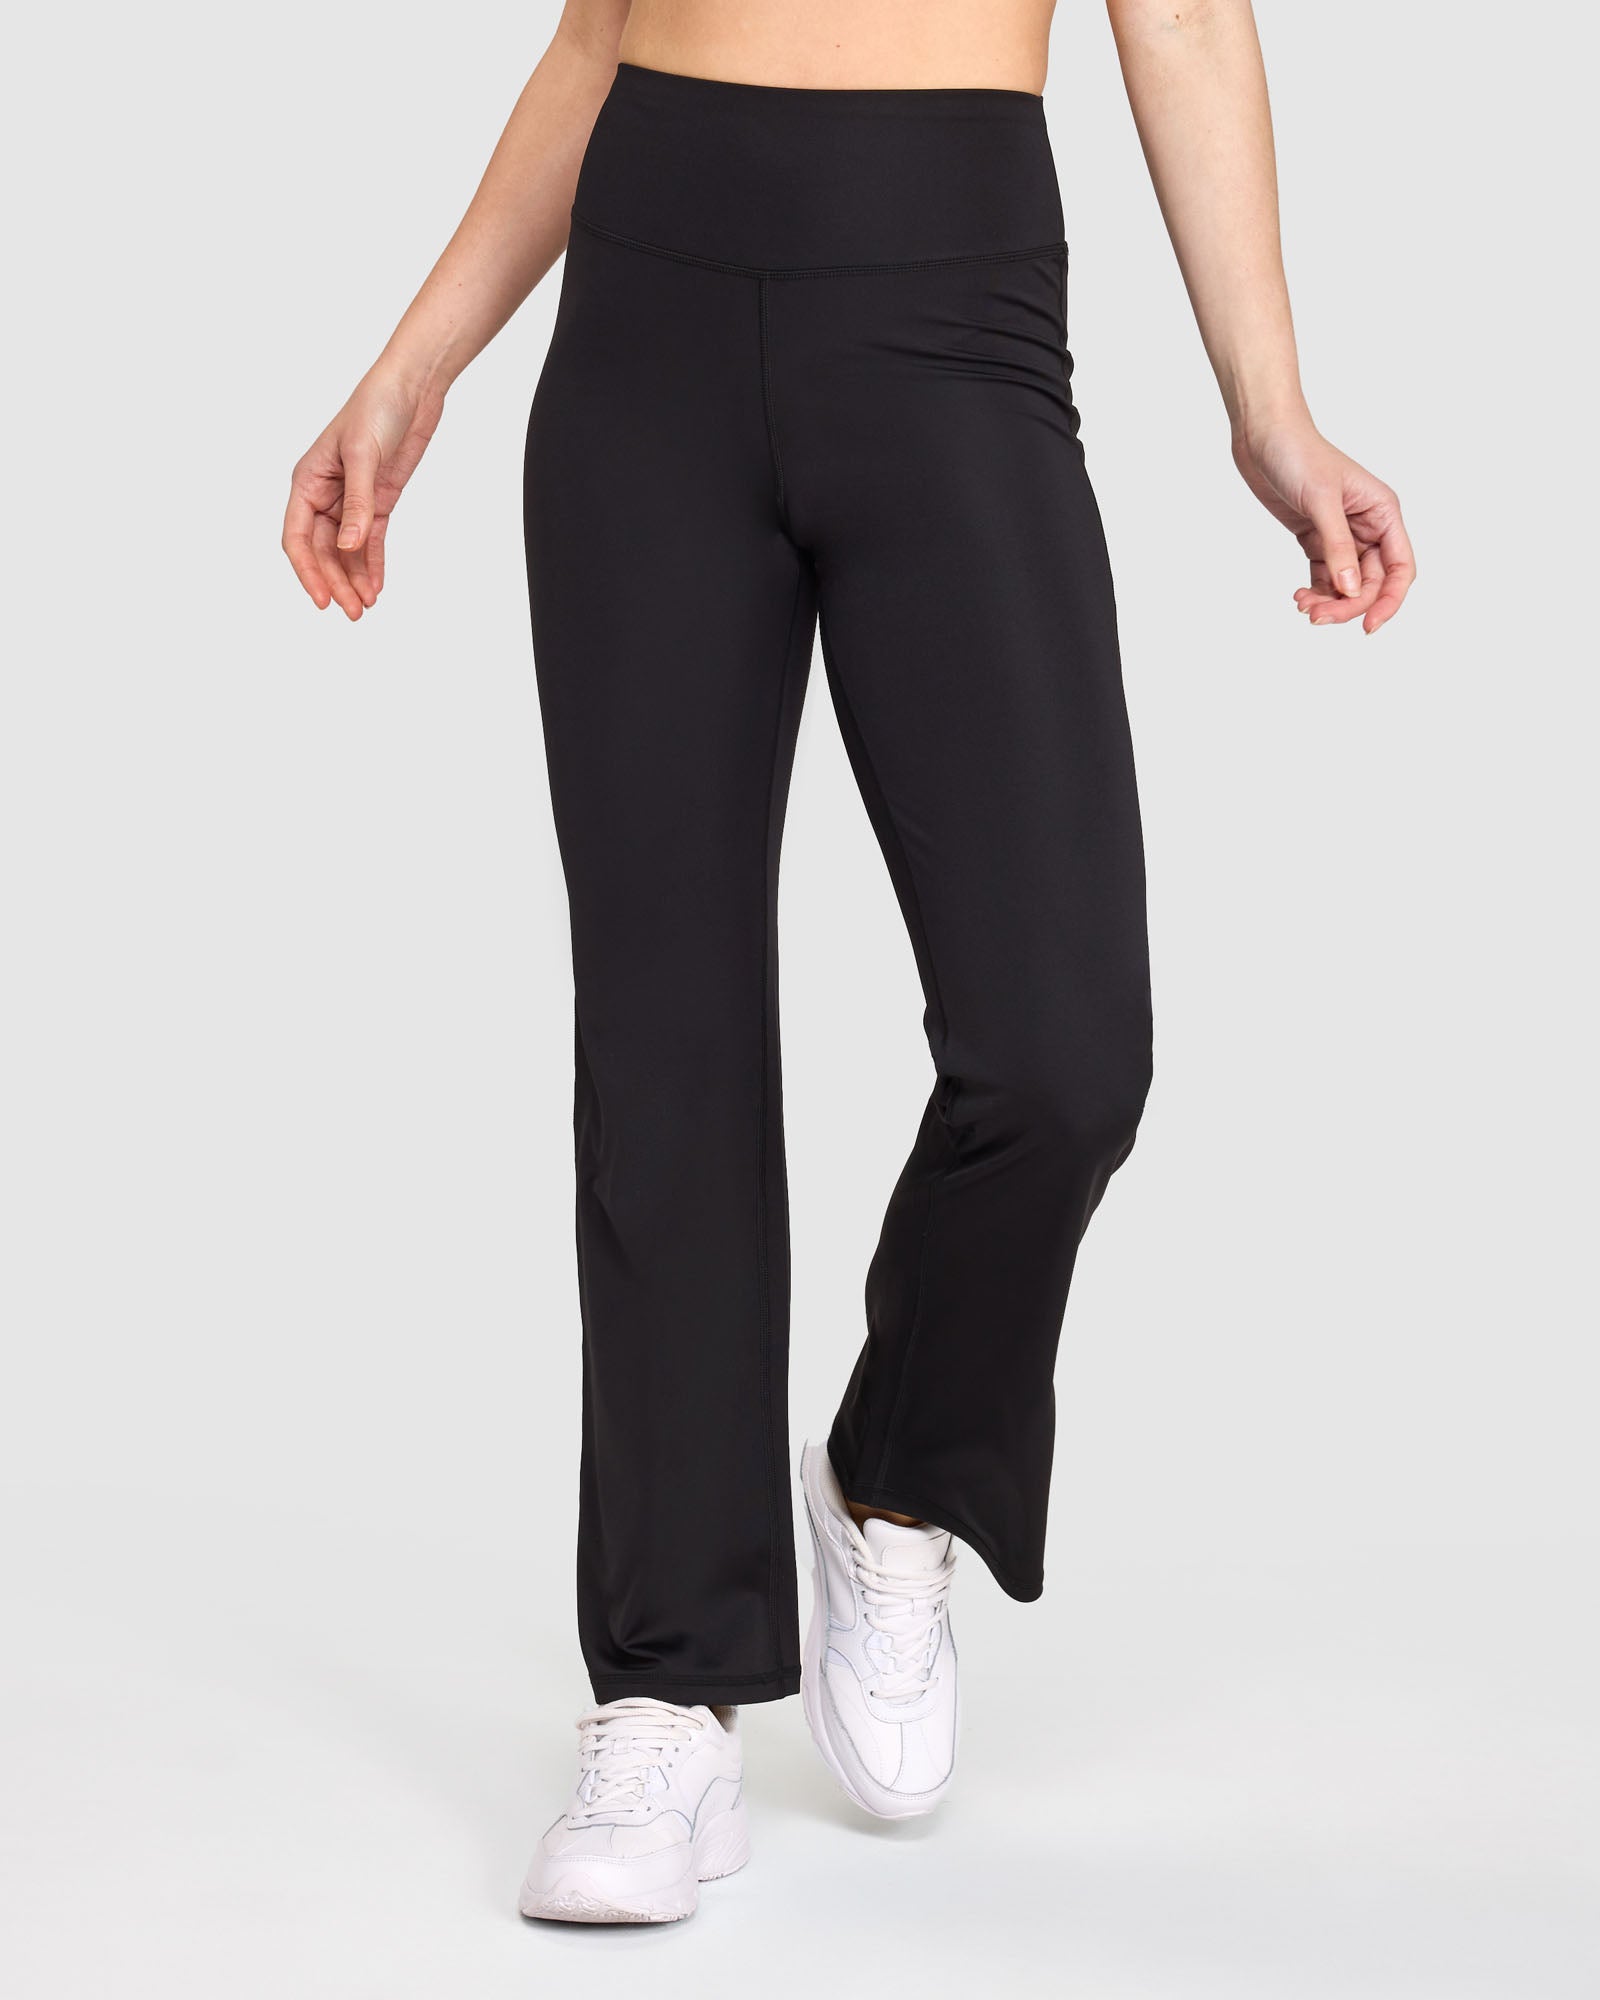 FILA Sport Women's XS Black Athleisure Flare Workout Zip Pocket Yoga Pants  